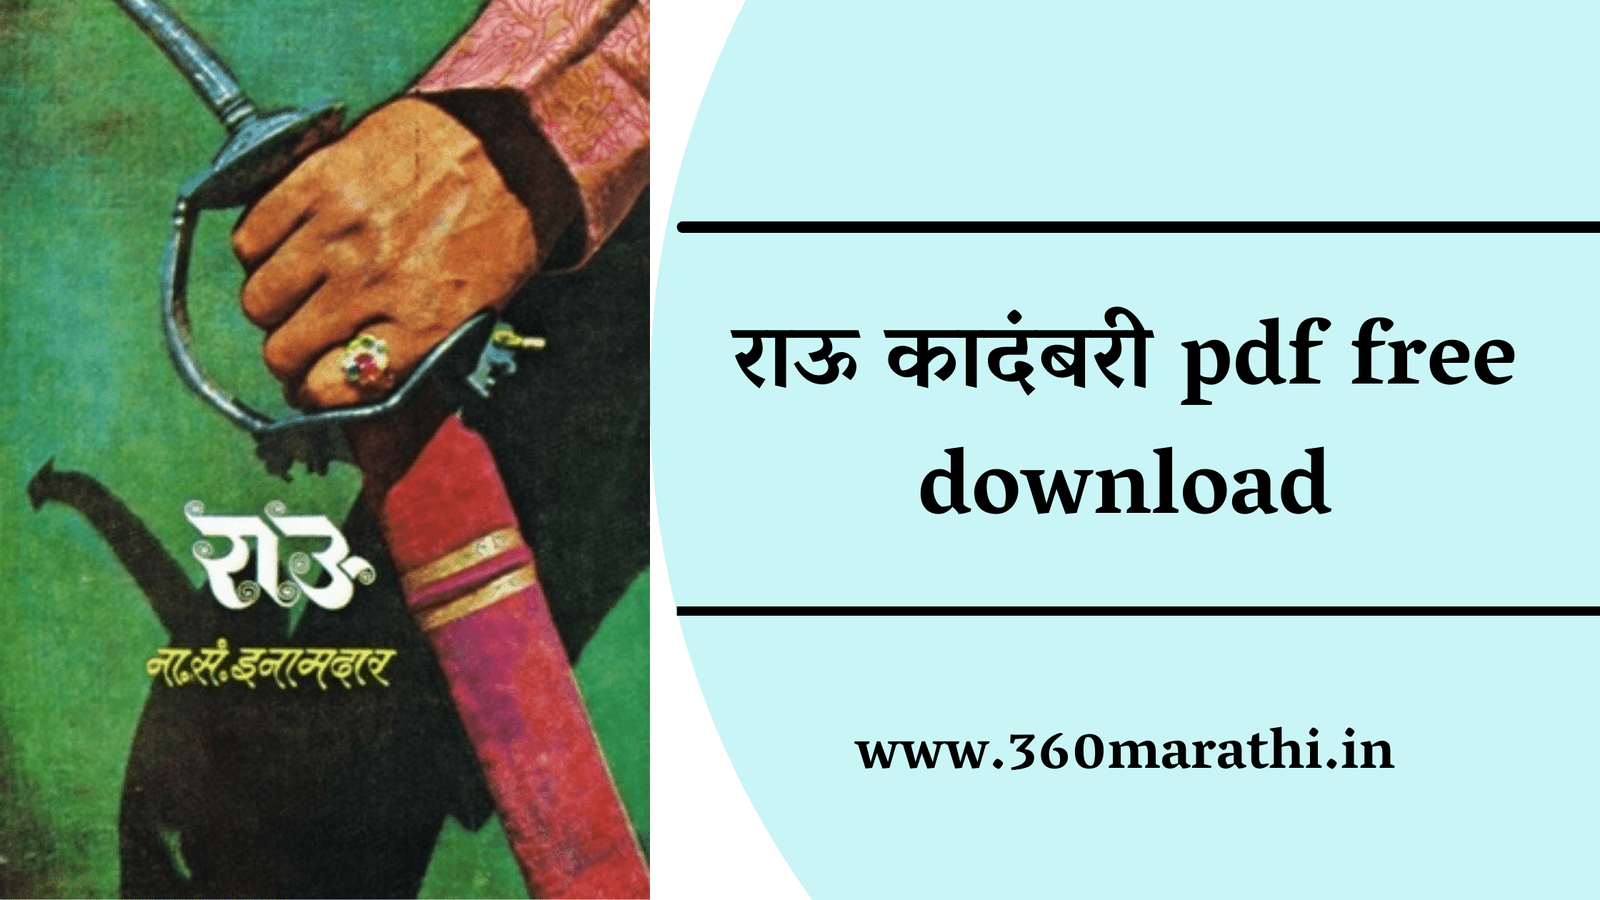 Rau kadambari pdf in marathi download | राऊ कादंबरी pdf free download